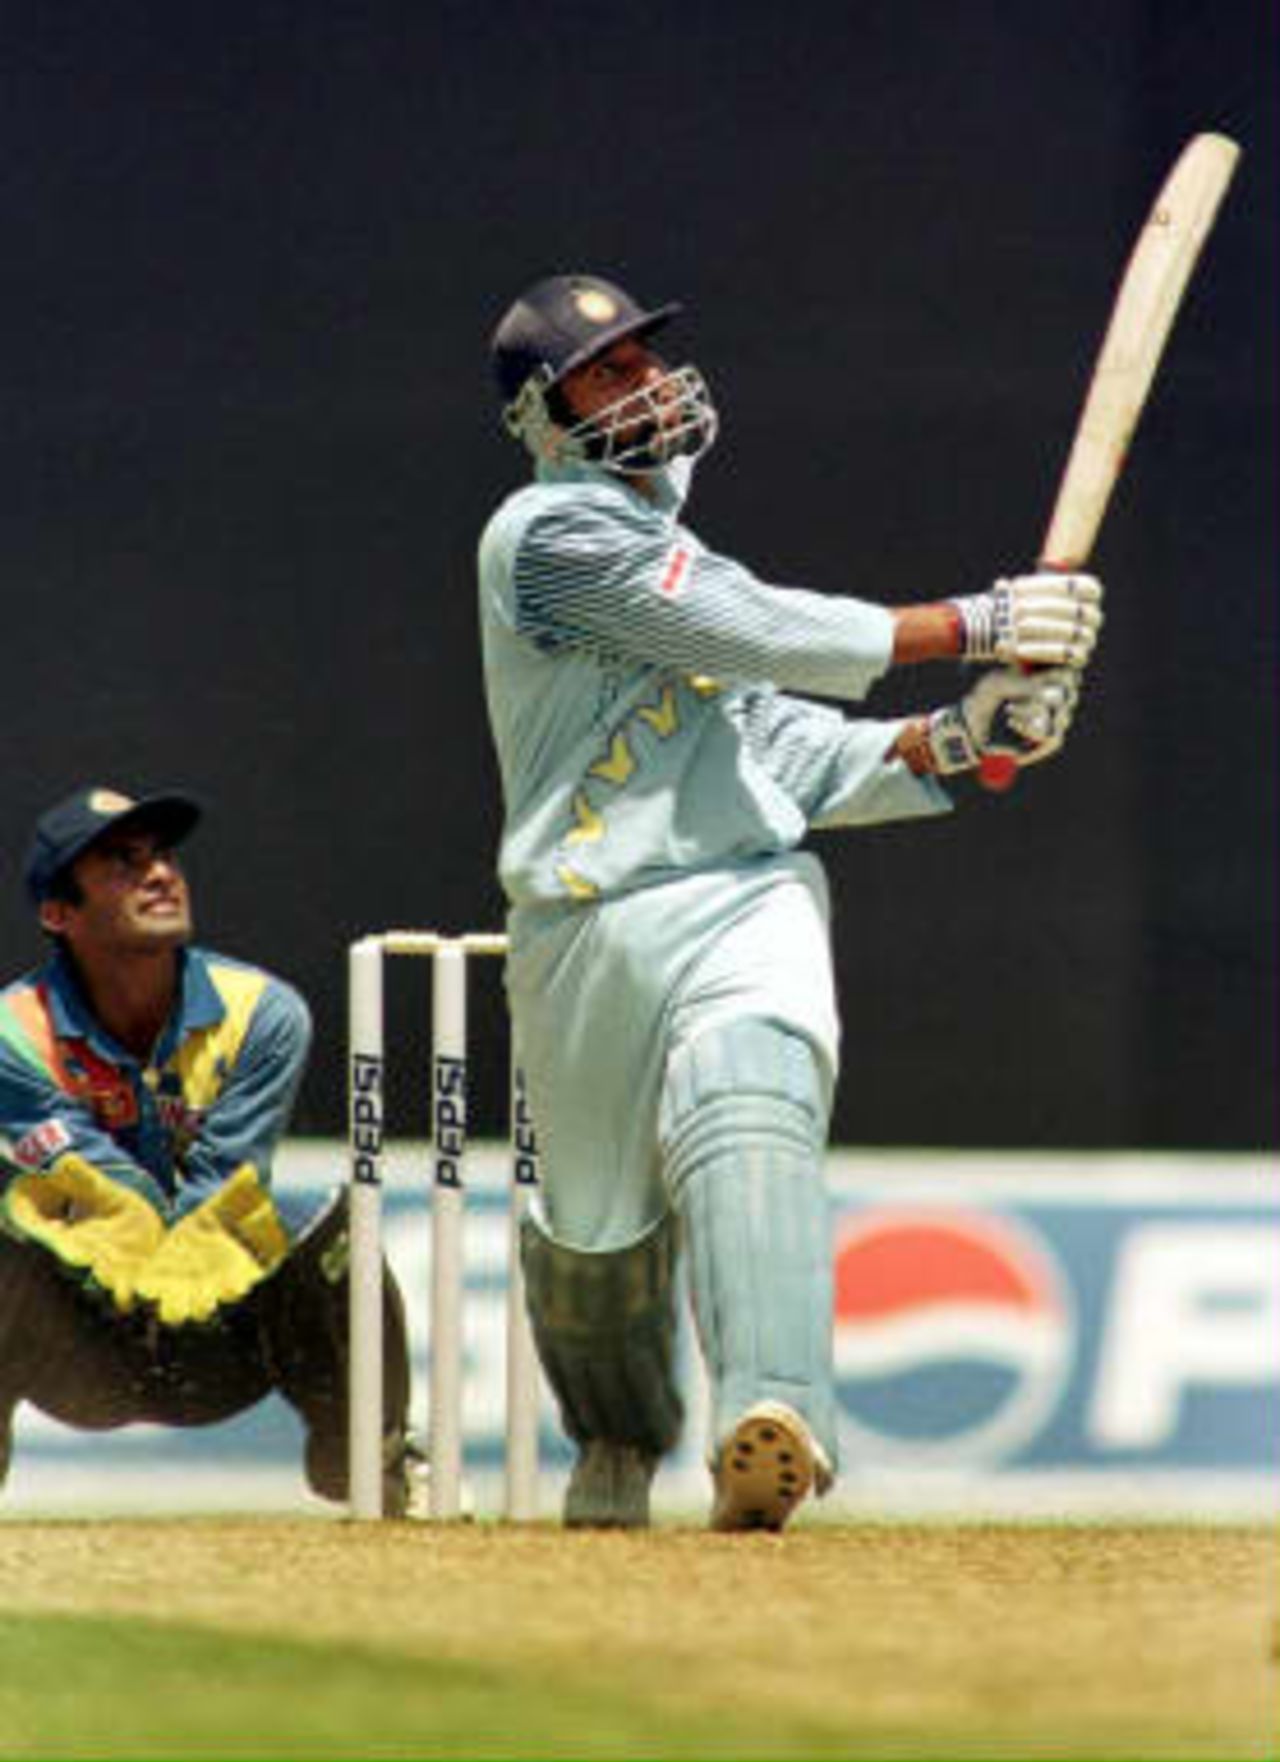 Indian captain Ajay Jadeja hits a six as Sri Lankan wicketkeeper Hashan Tillekaratne looks on, on 30 March 1999, at Nehru Stadium in Pune.